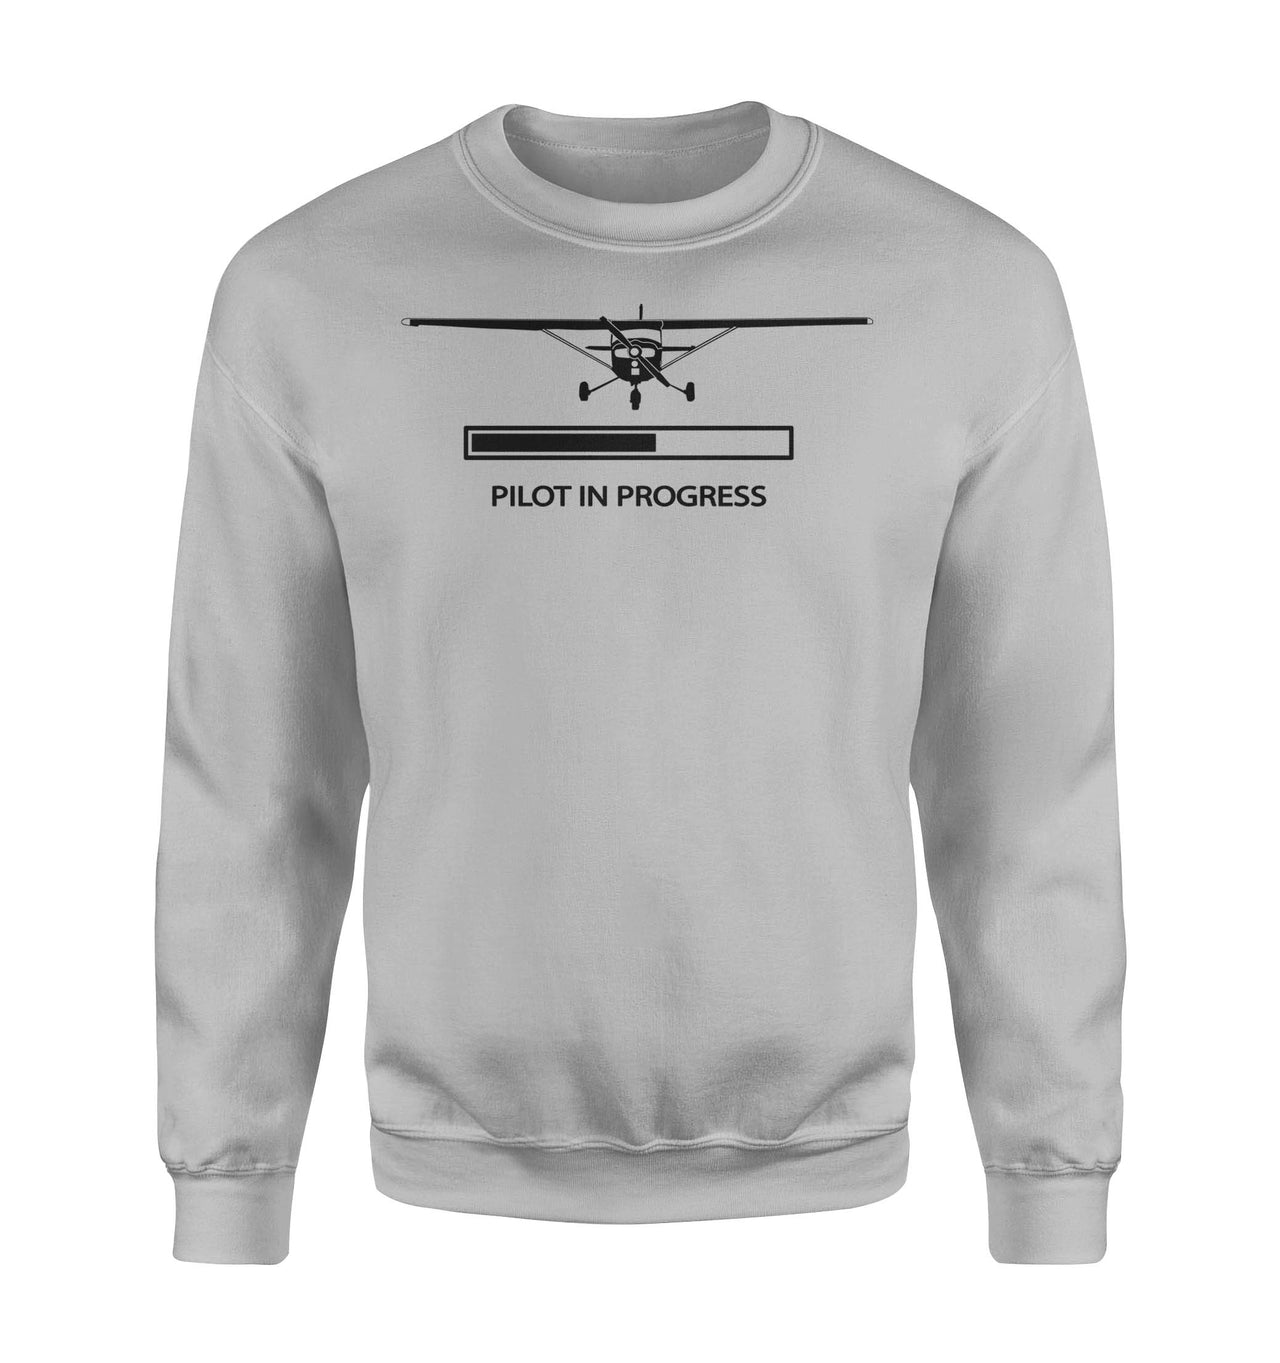 Pilot In Progress (Cessna) Designed Sweatshirts